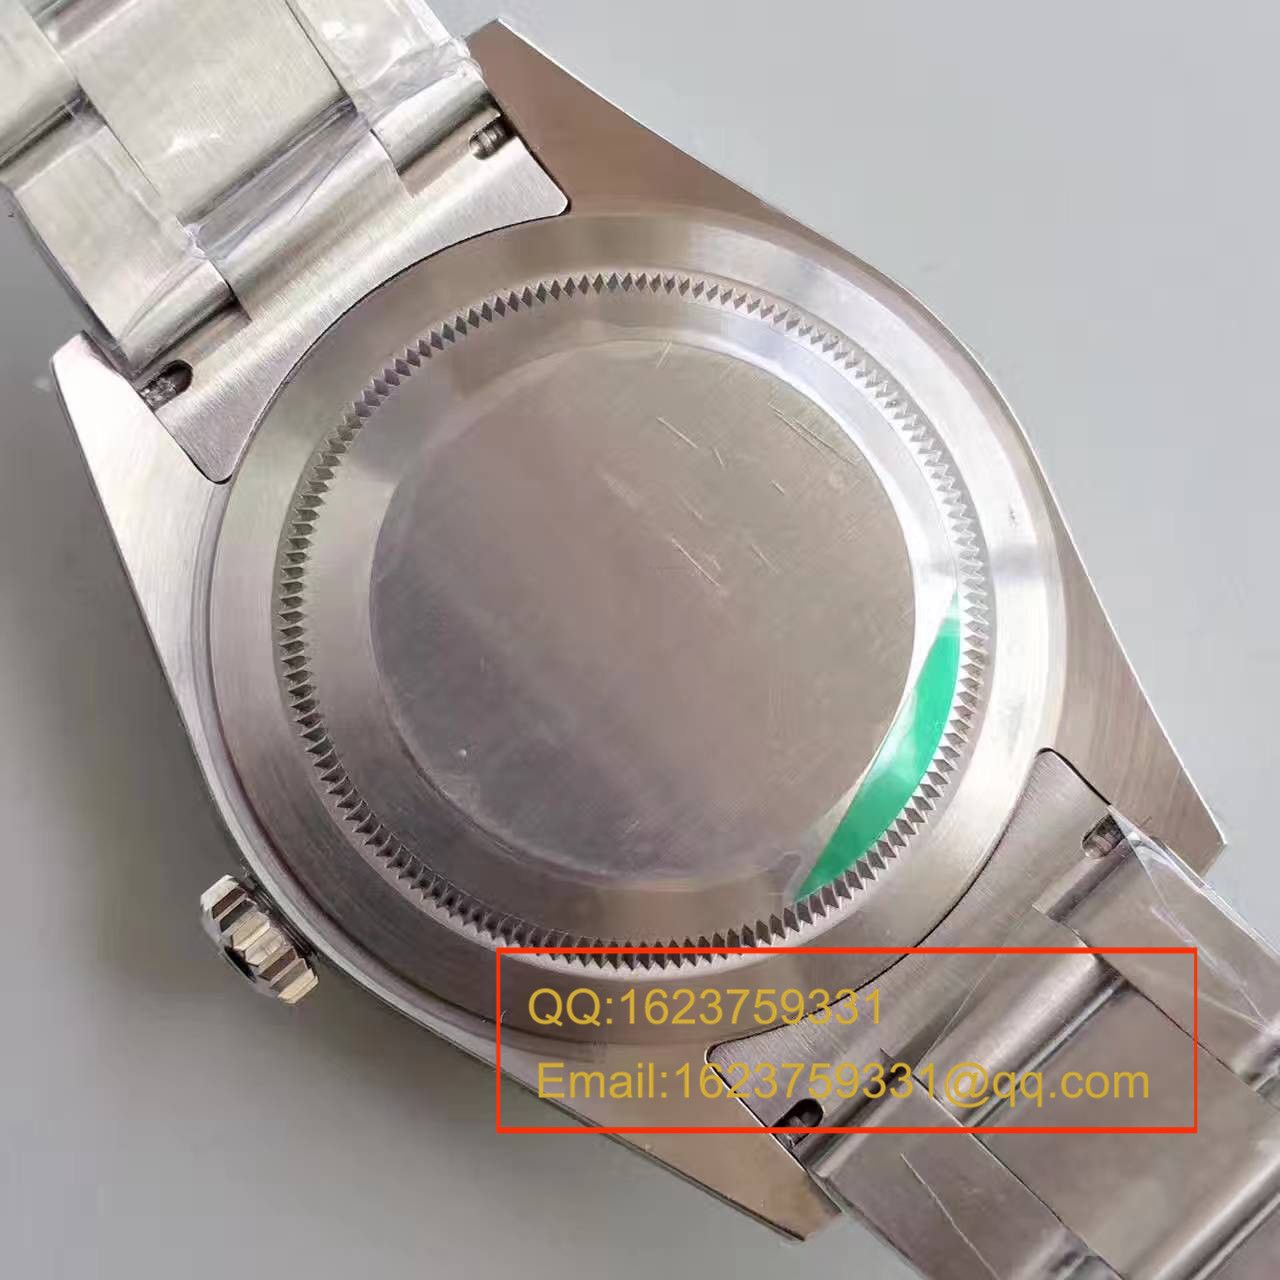 【JF厂1:1复刻手表】劳力士 探险者一代EXP1 （V10S）顶级版 214270-77200 黑盘腕表 